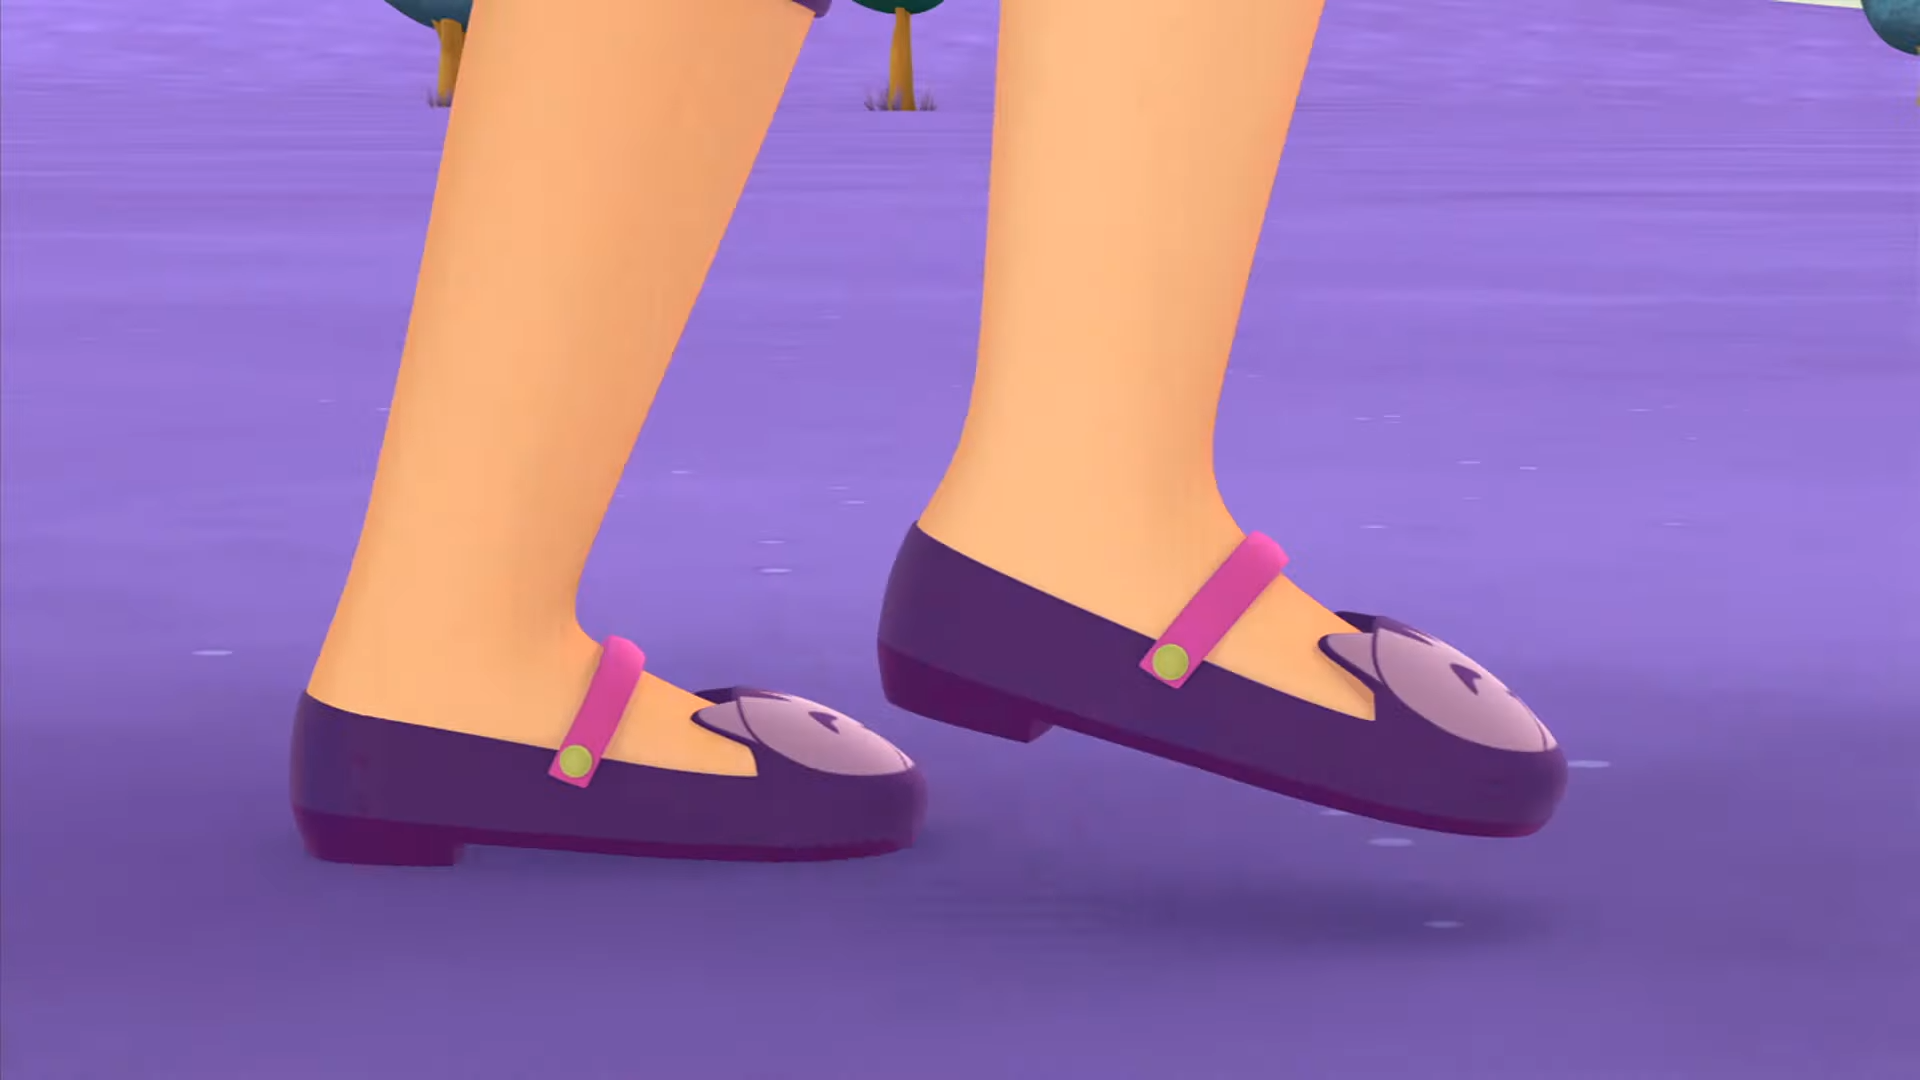 cartoon legs and feet wearing purple shoes